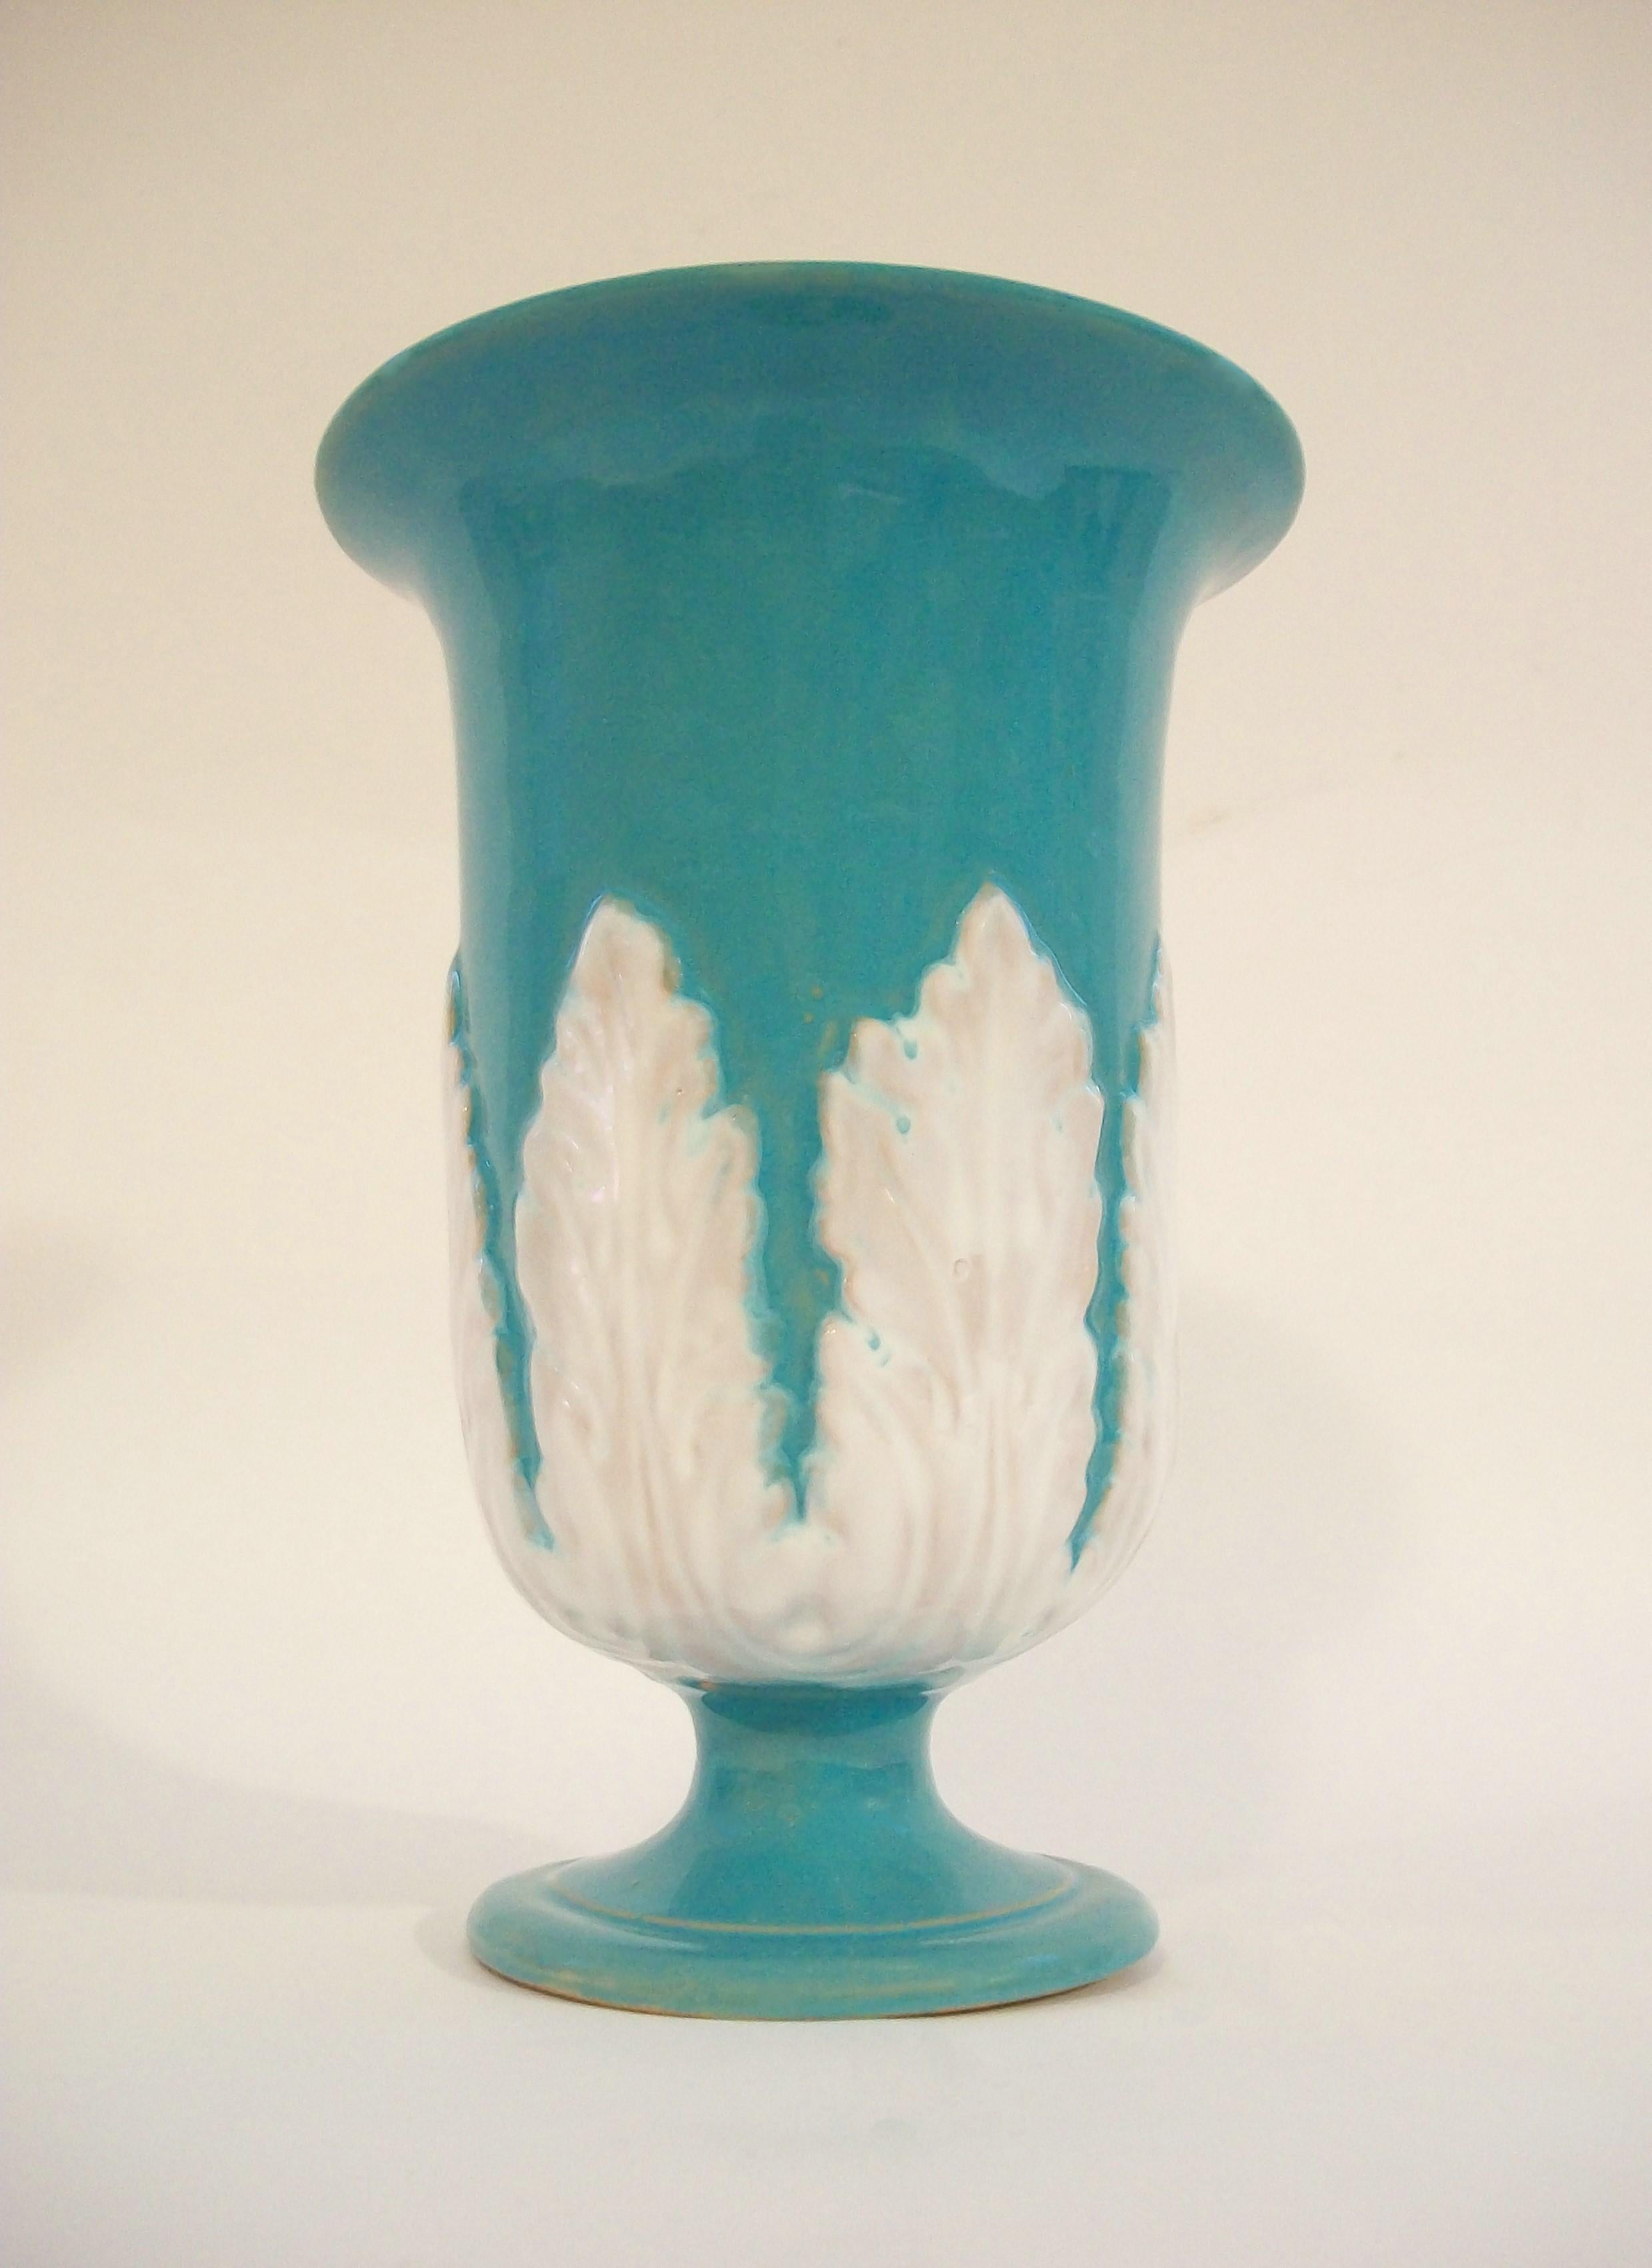 italien Grand vase Hollywood Regency en terre cuite émaillée turquoise - Italie - vers les années 1960 en vente